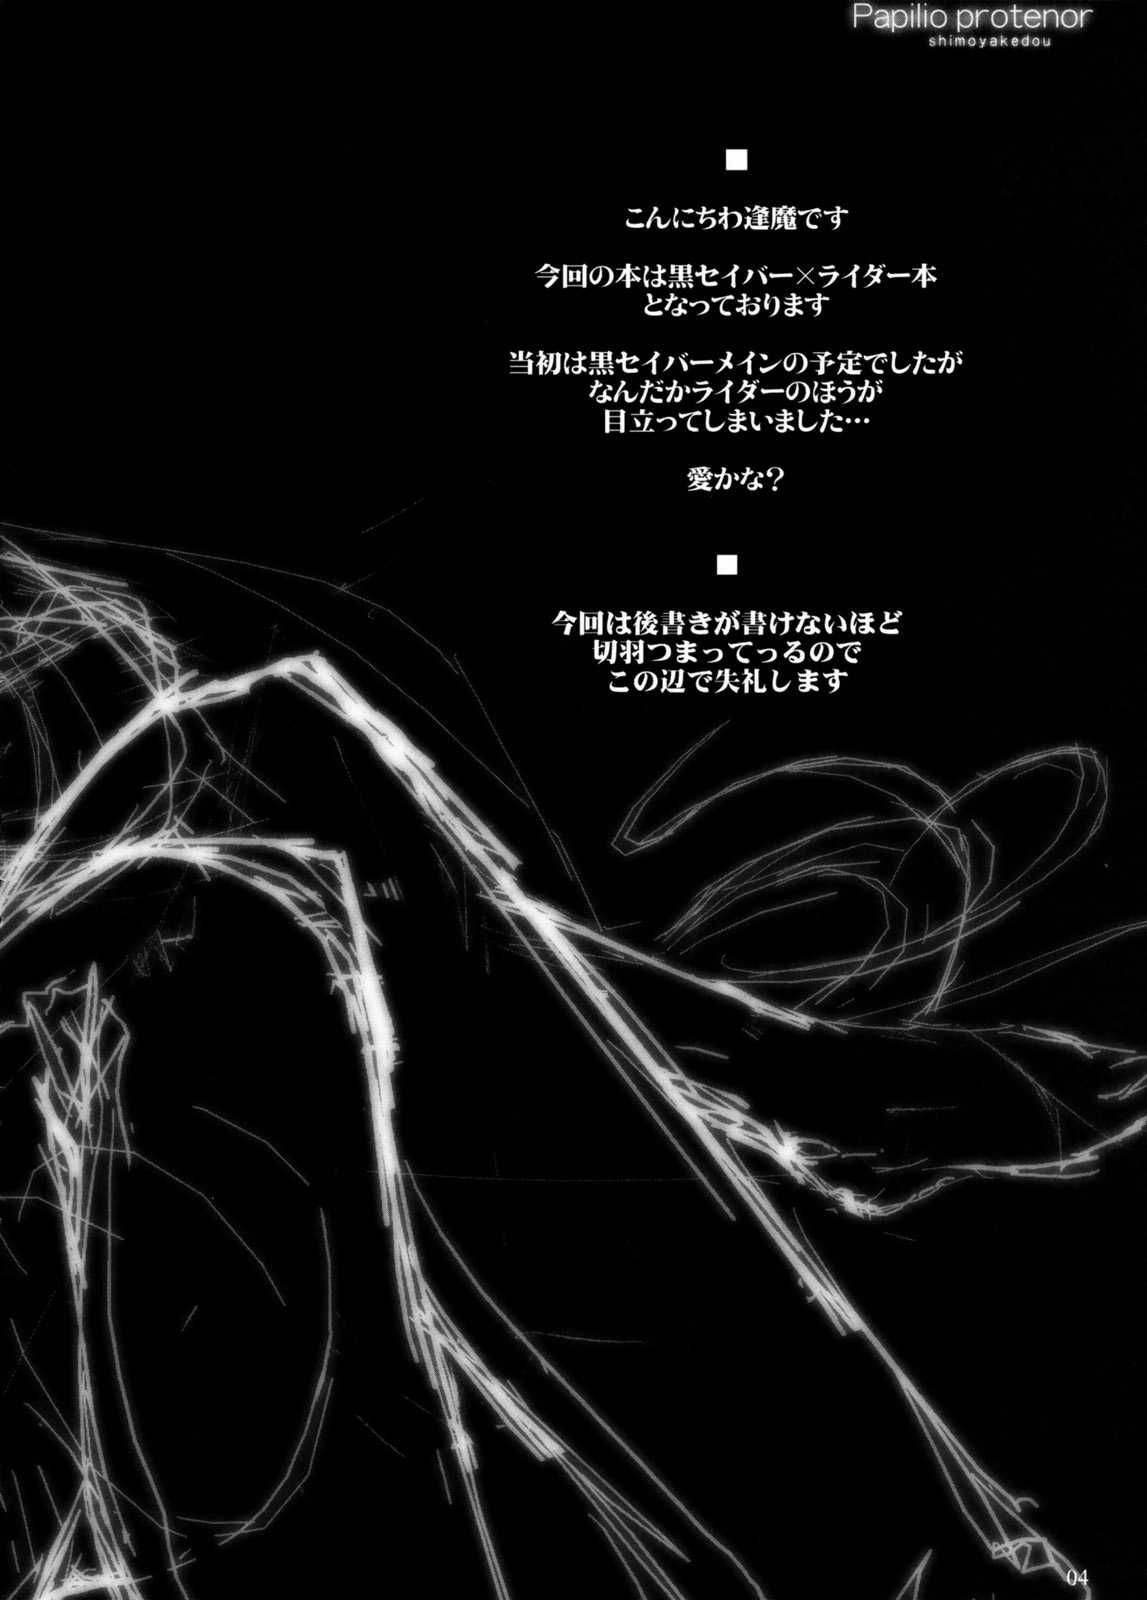 [Fate/Stay Night] Papilio Protenor (English) 